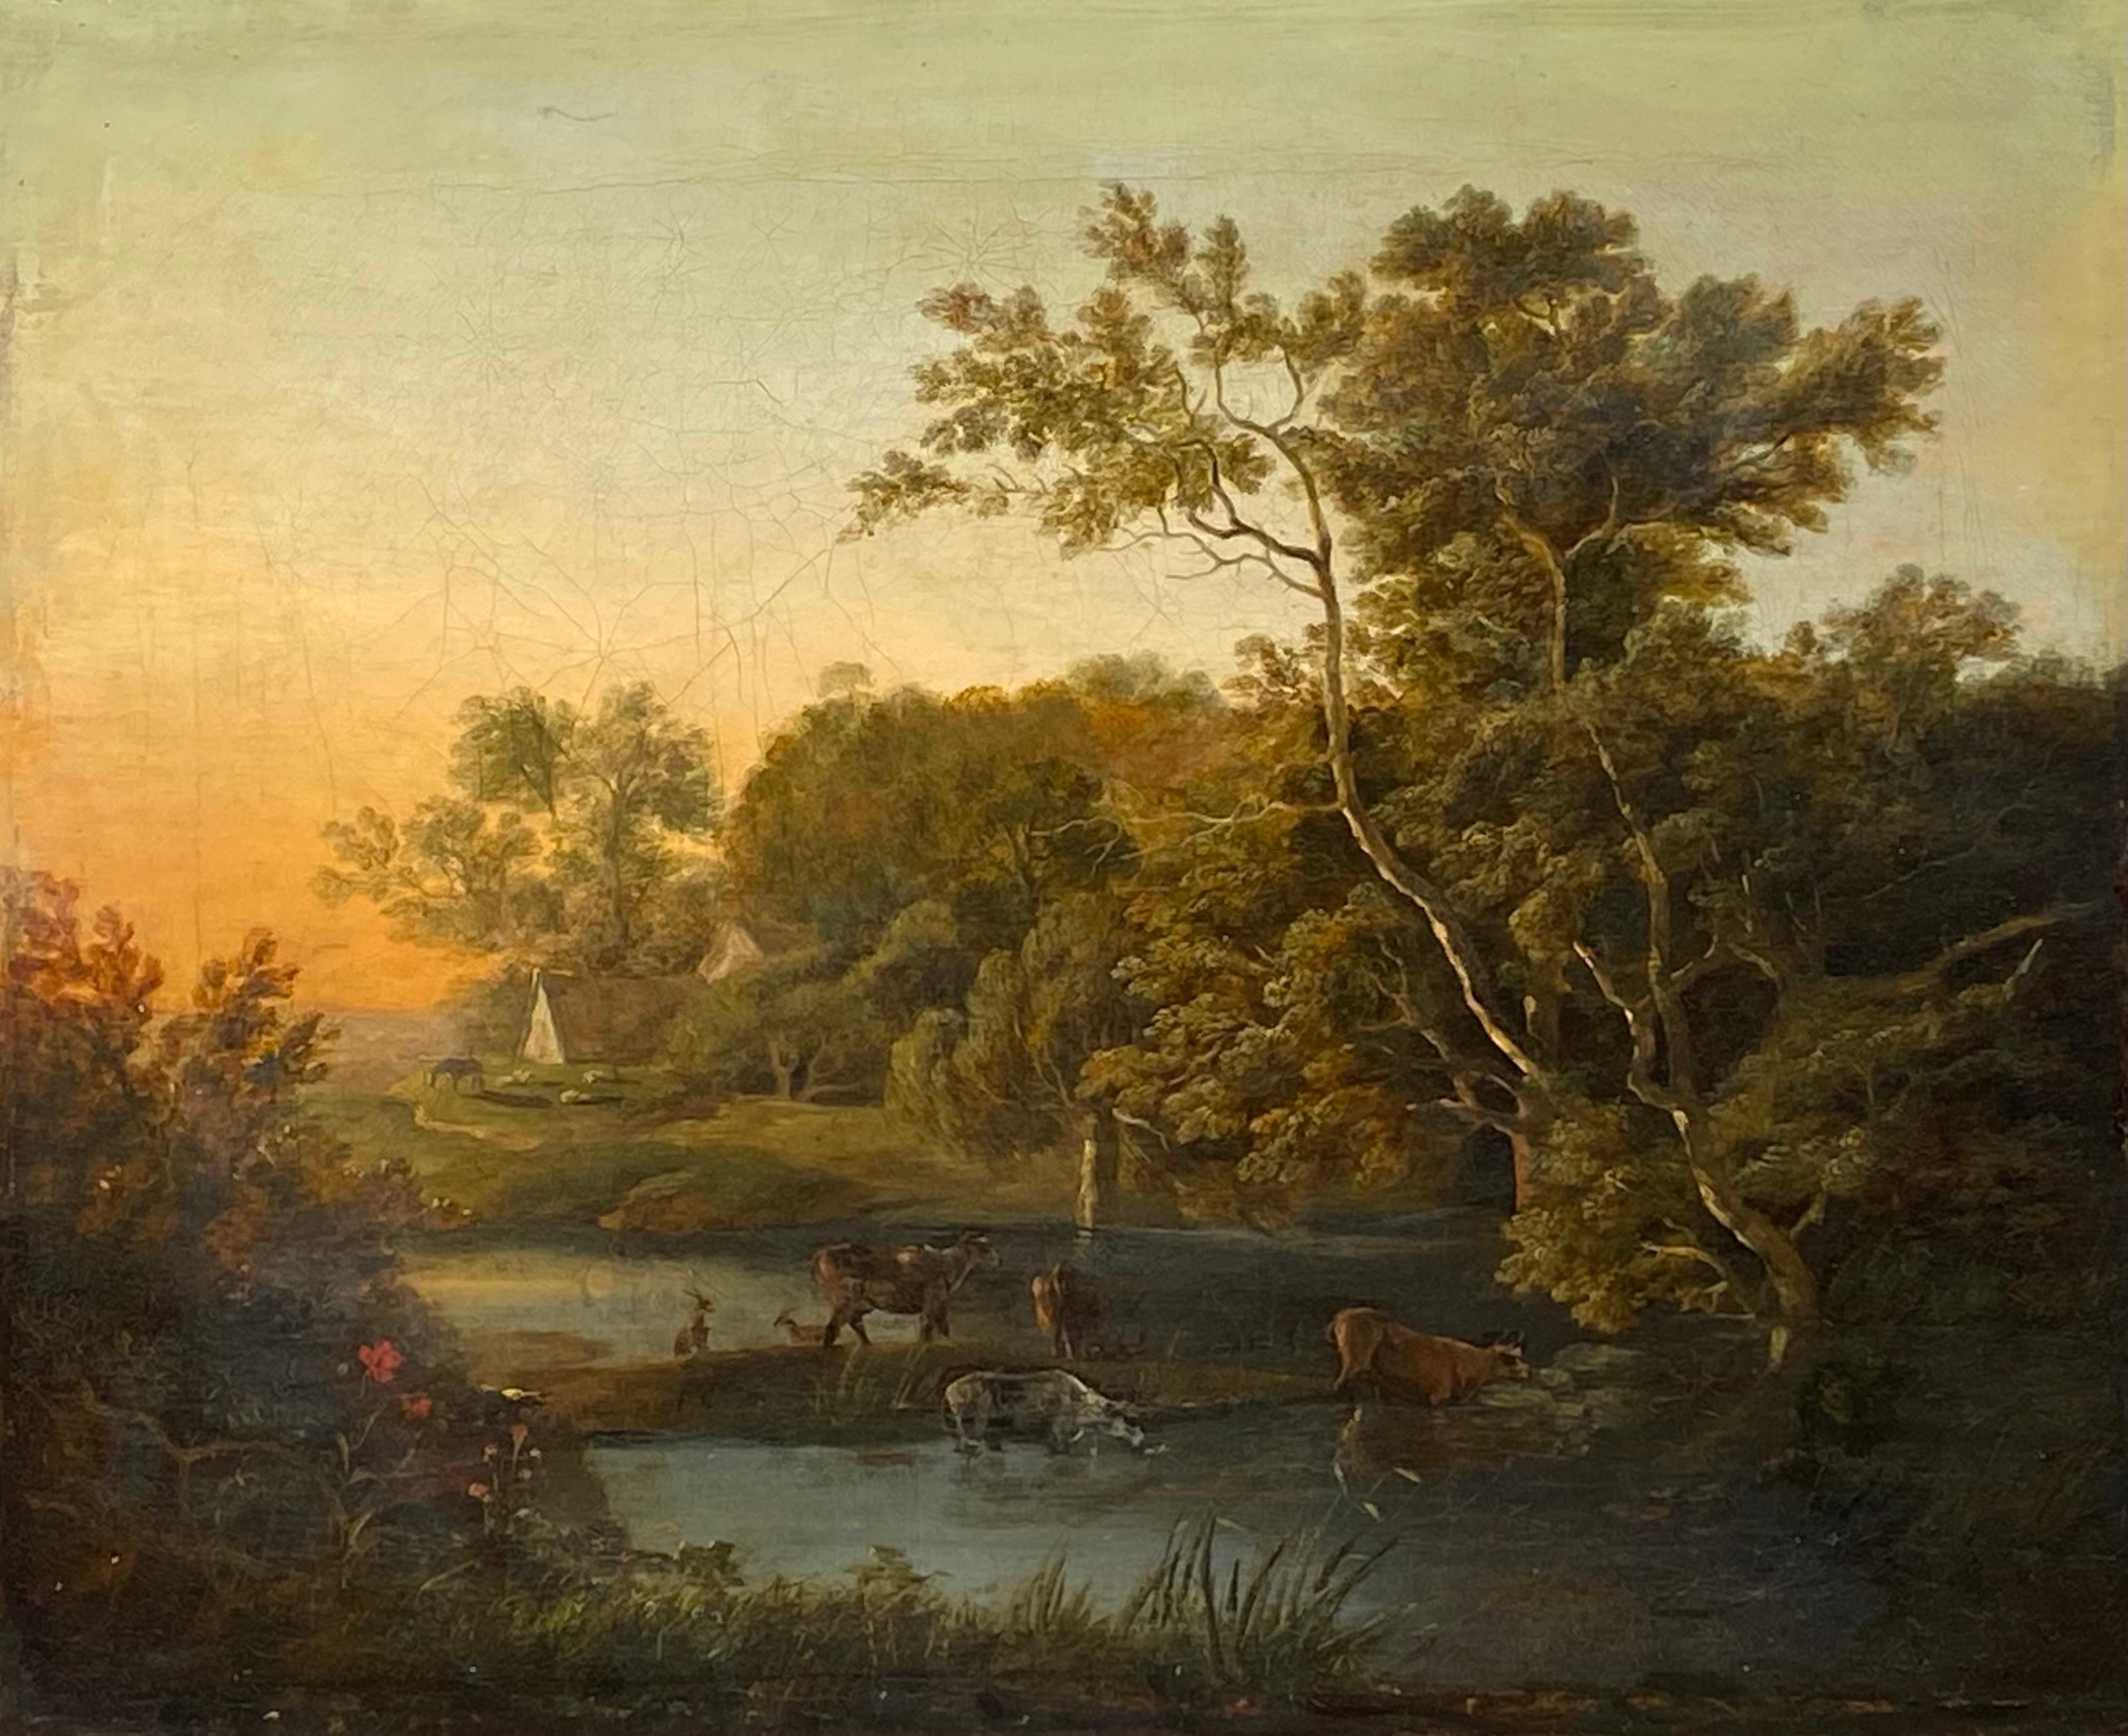 Ramsay Richard Reinagle Landscape Painting - “Bucolic Landscape at Sunset”